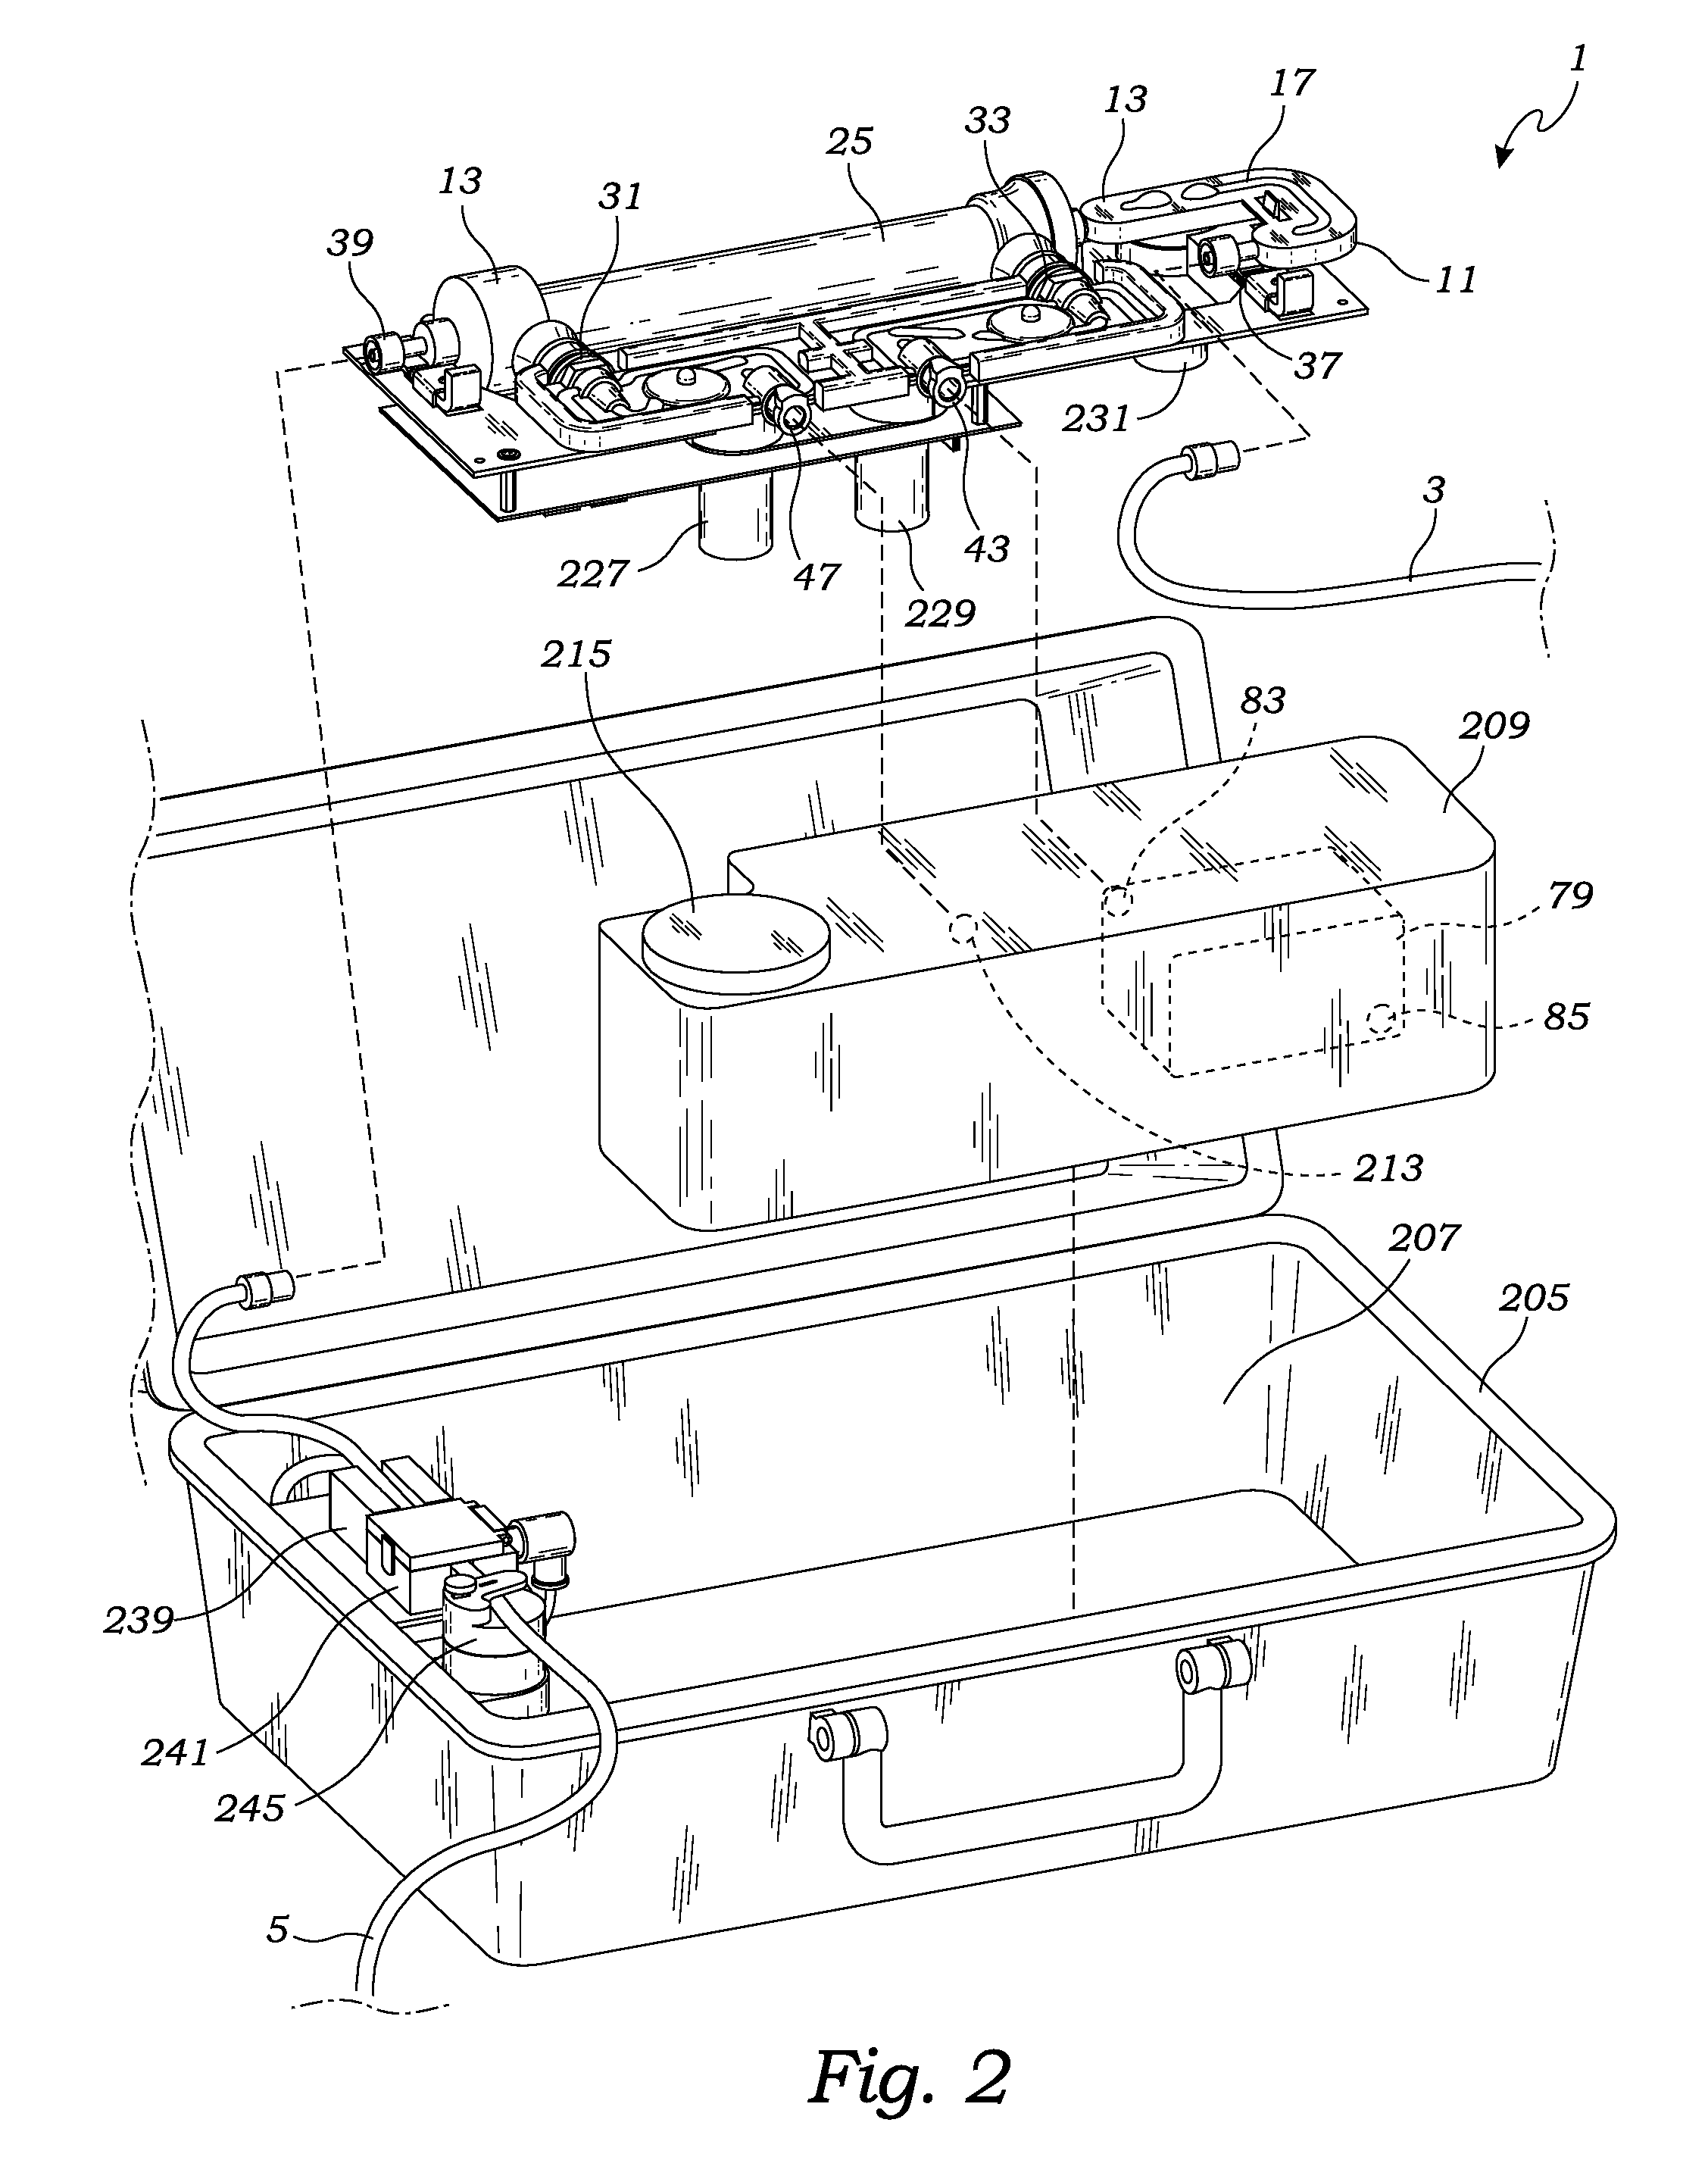 Portable hemodialysis machine and disposable cartridge with blood leak sensor